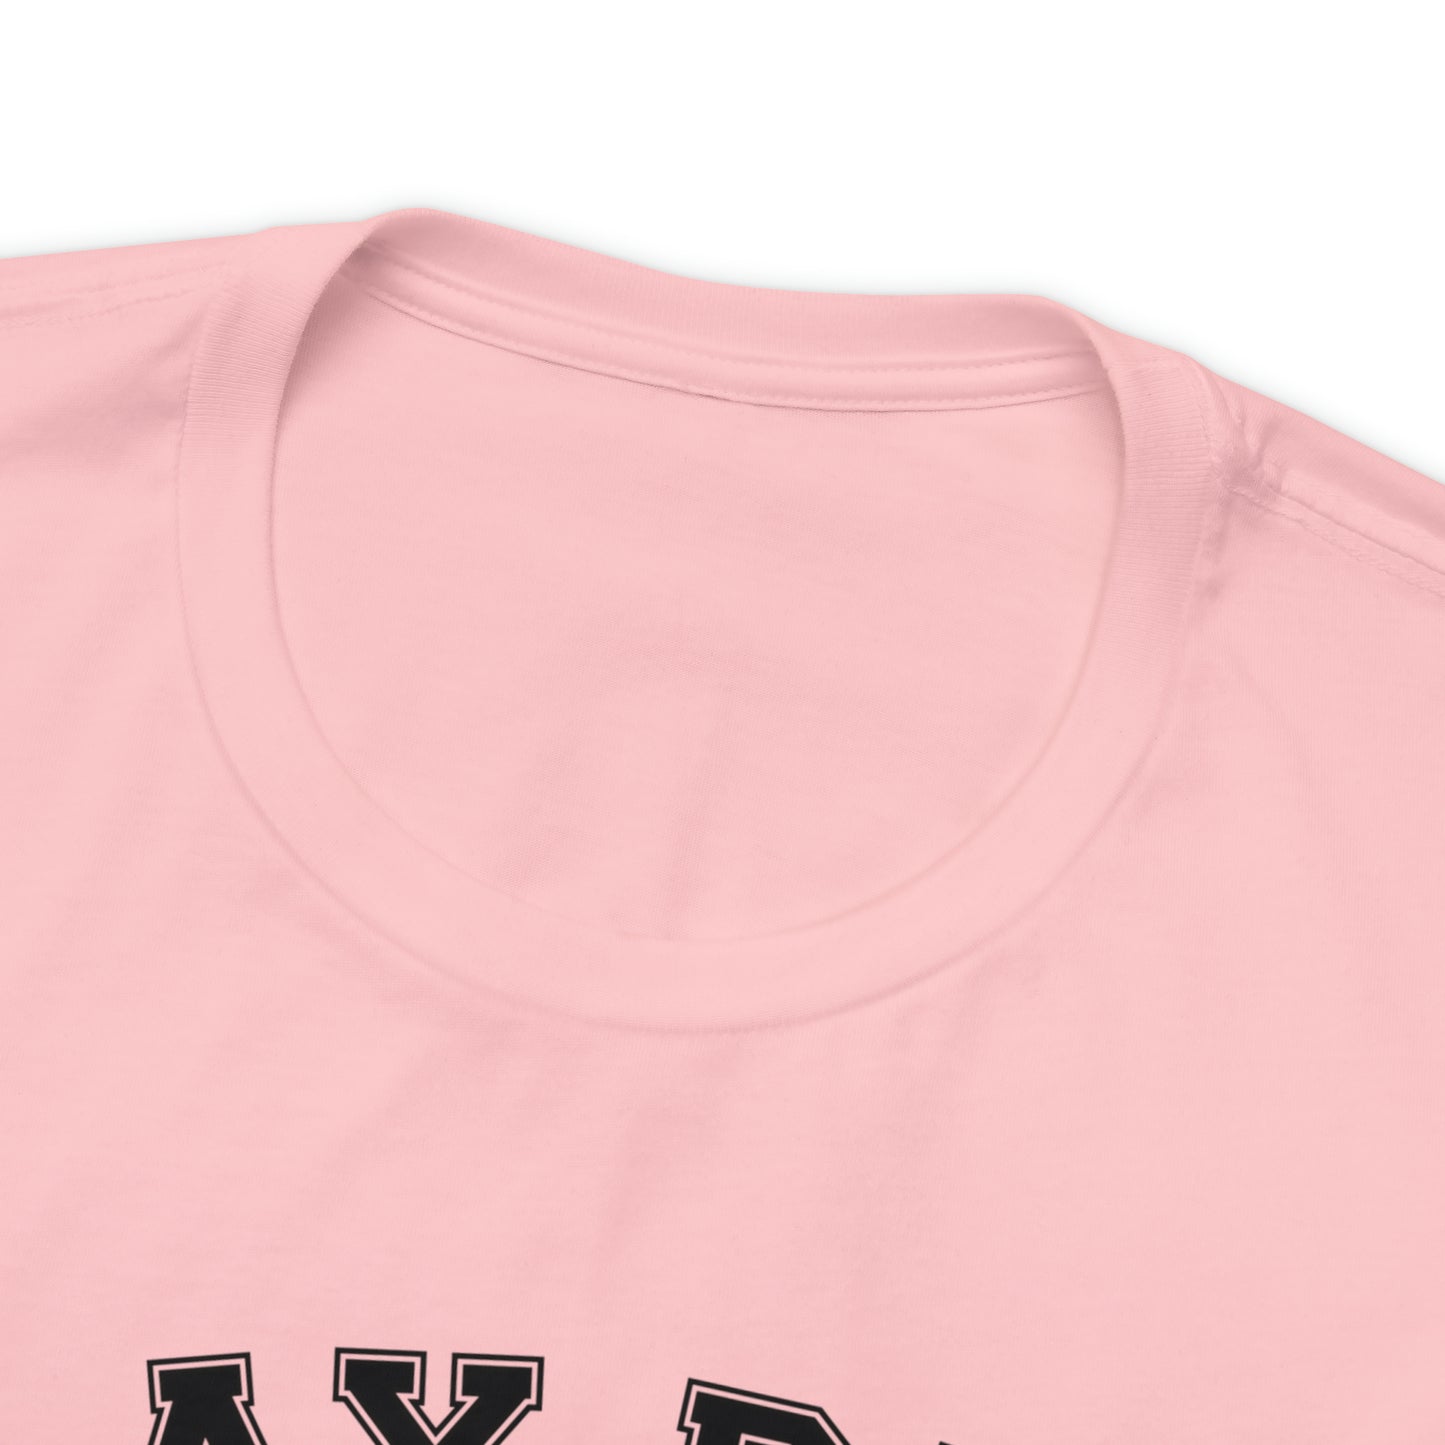 Baseball Game Fan Shirt for Her, Play Ball Shirt, Game Day Shirt, Cute Baseball Shirt for Women, Baseball Shirt for Women, T394